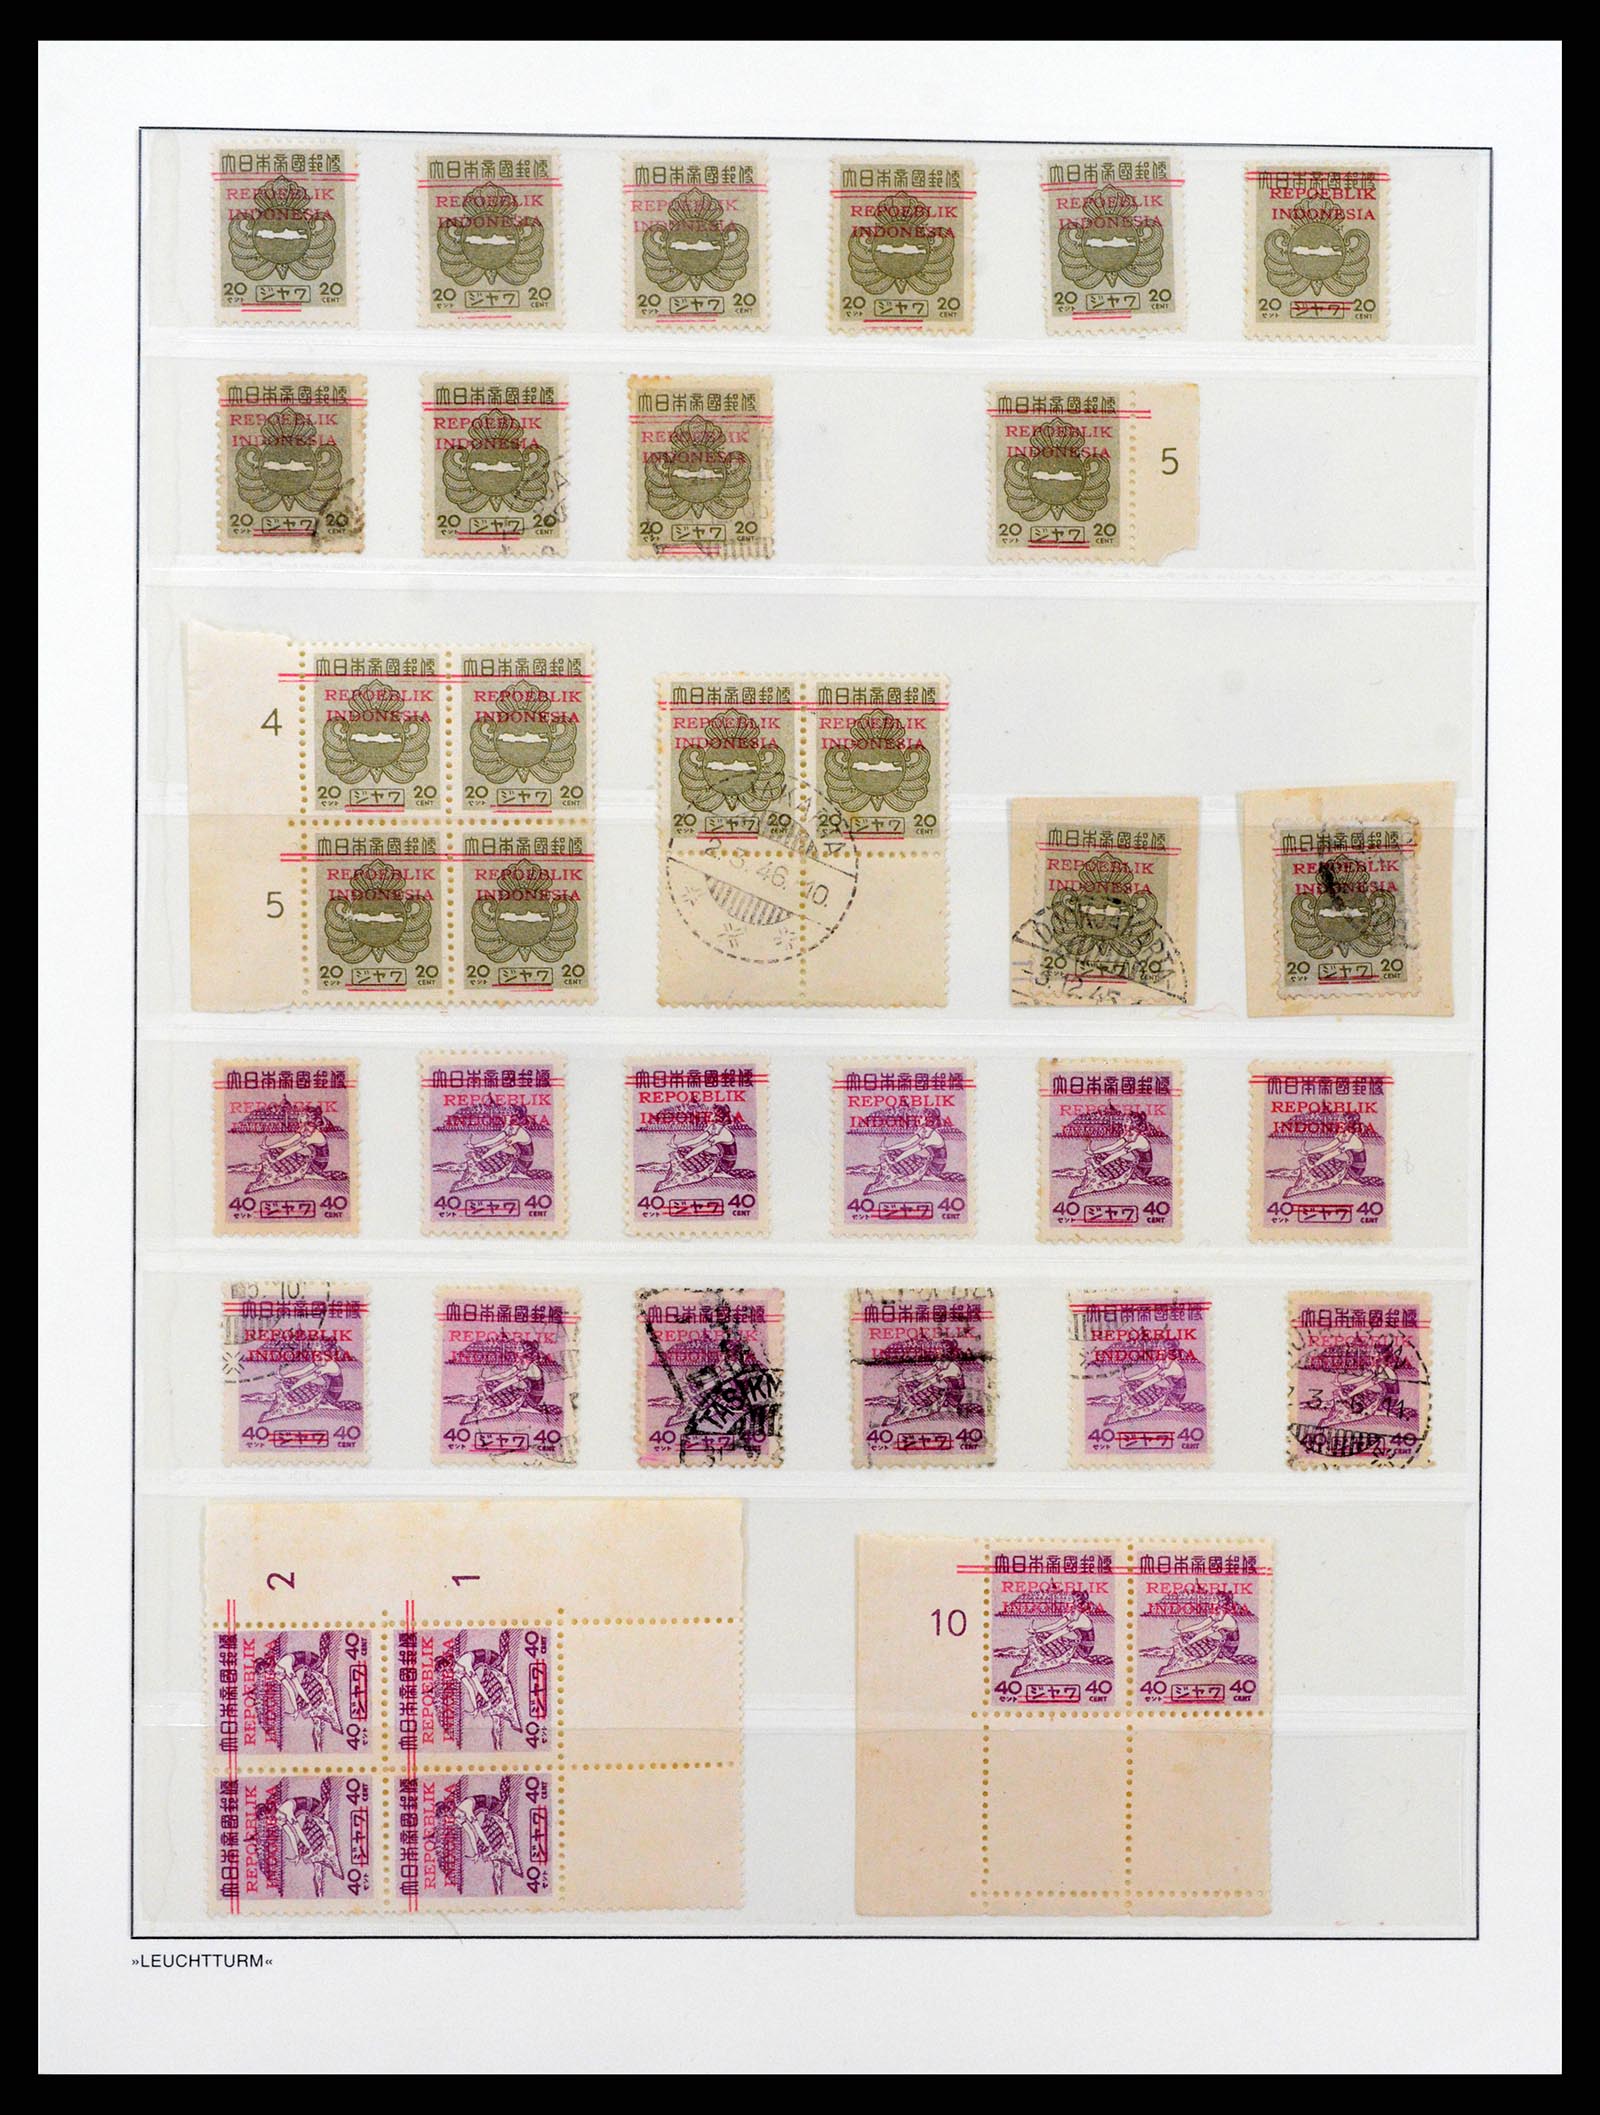 37435 005 - Stamp collection 37435 Indonesia interim period 1945-1948.